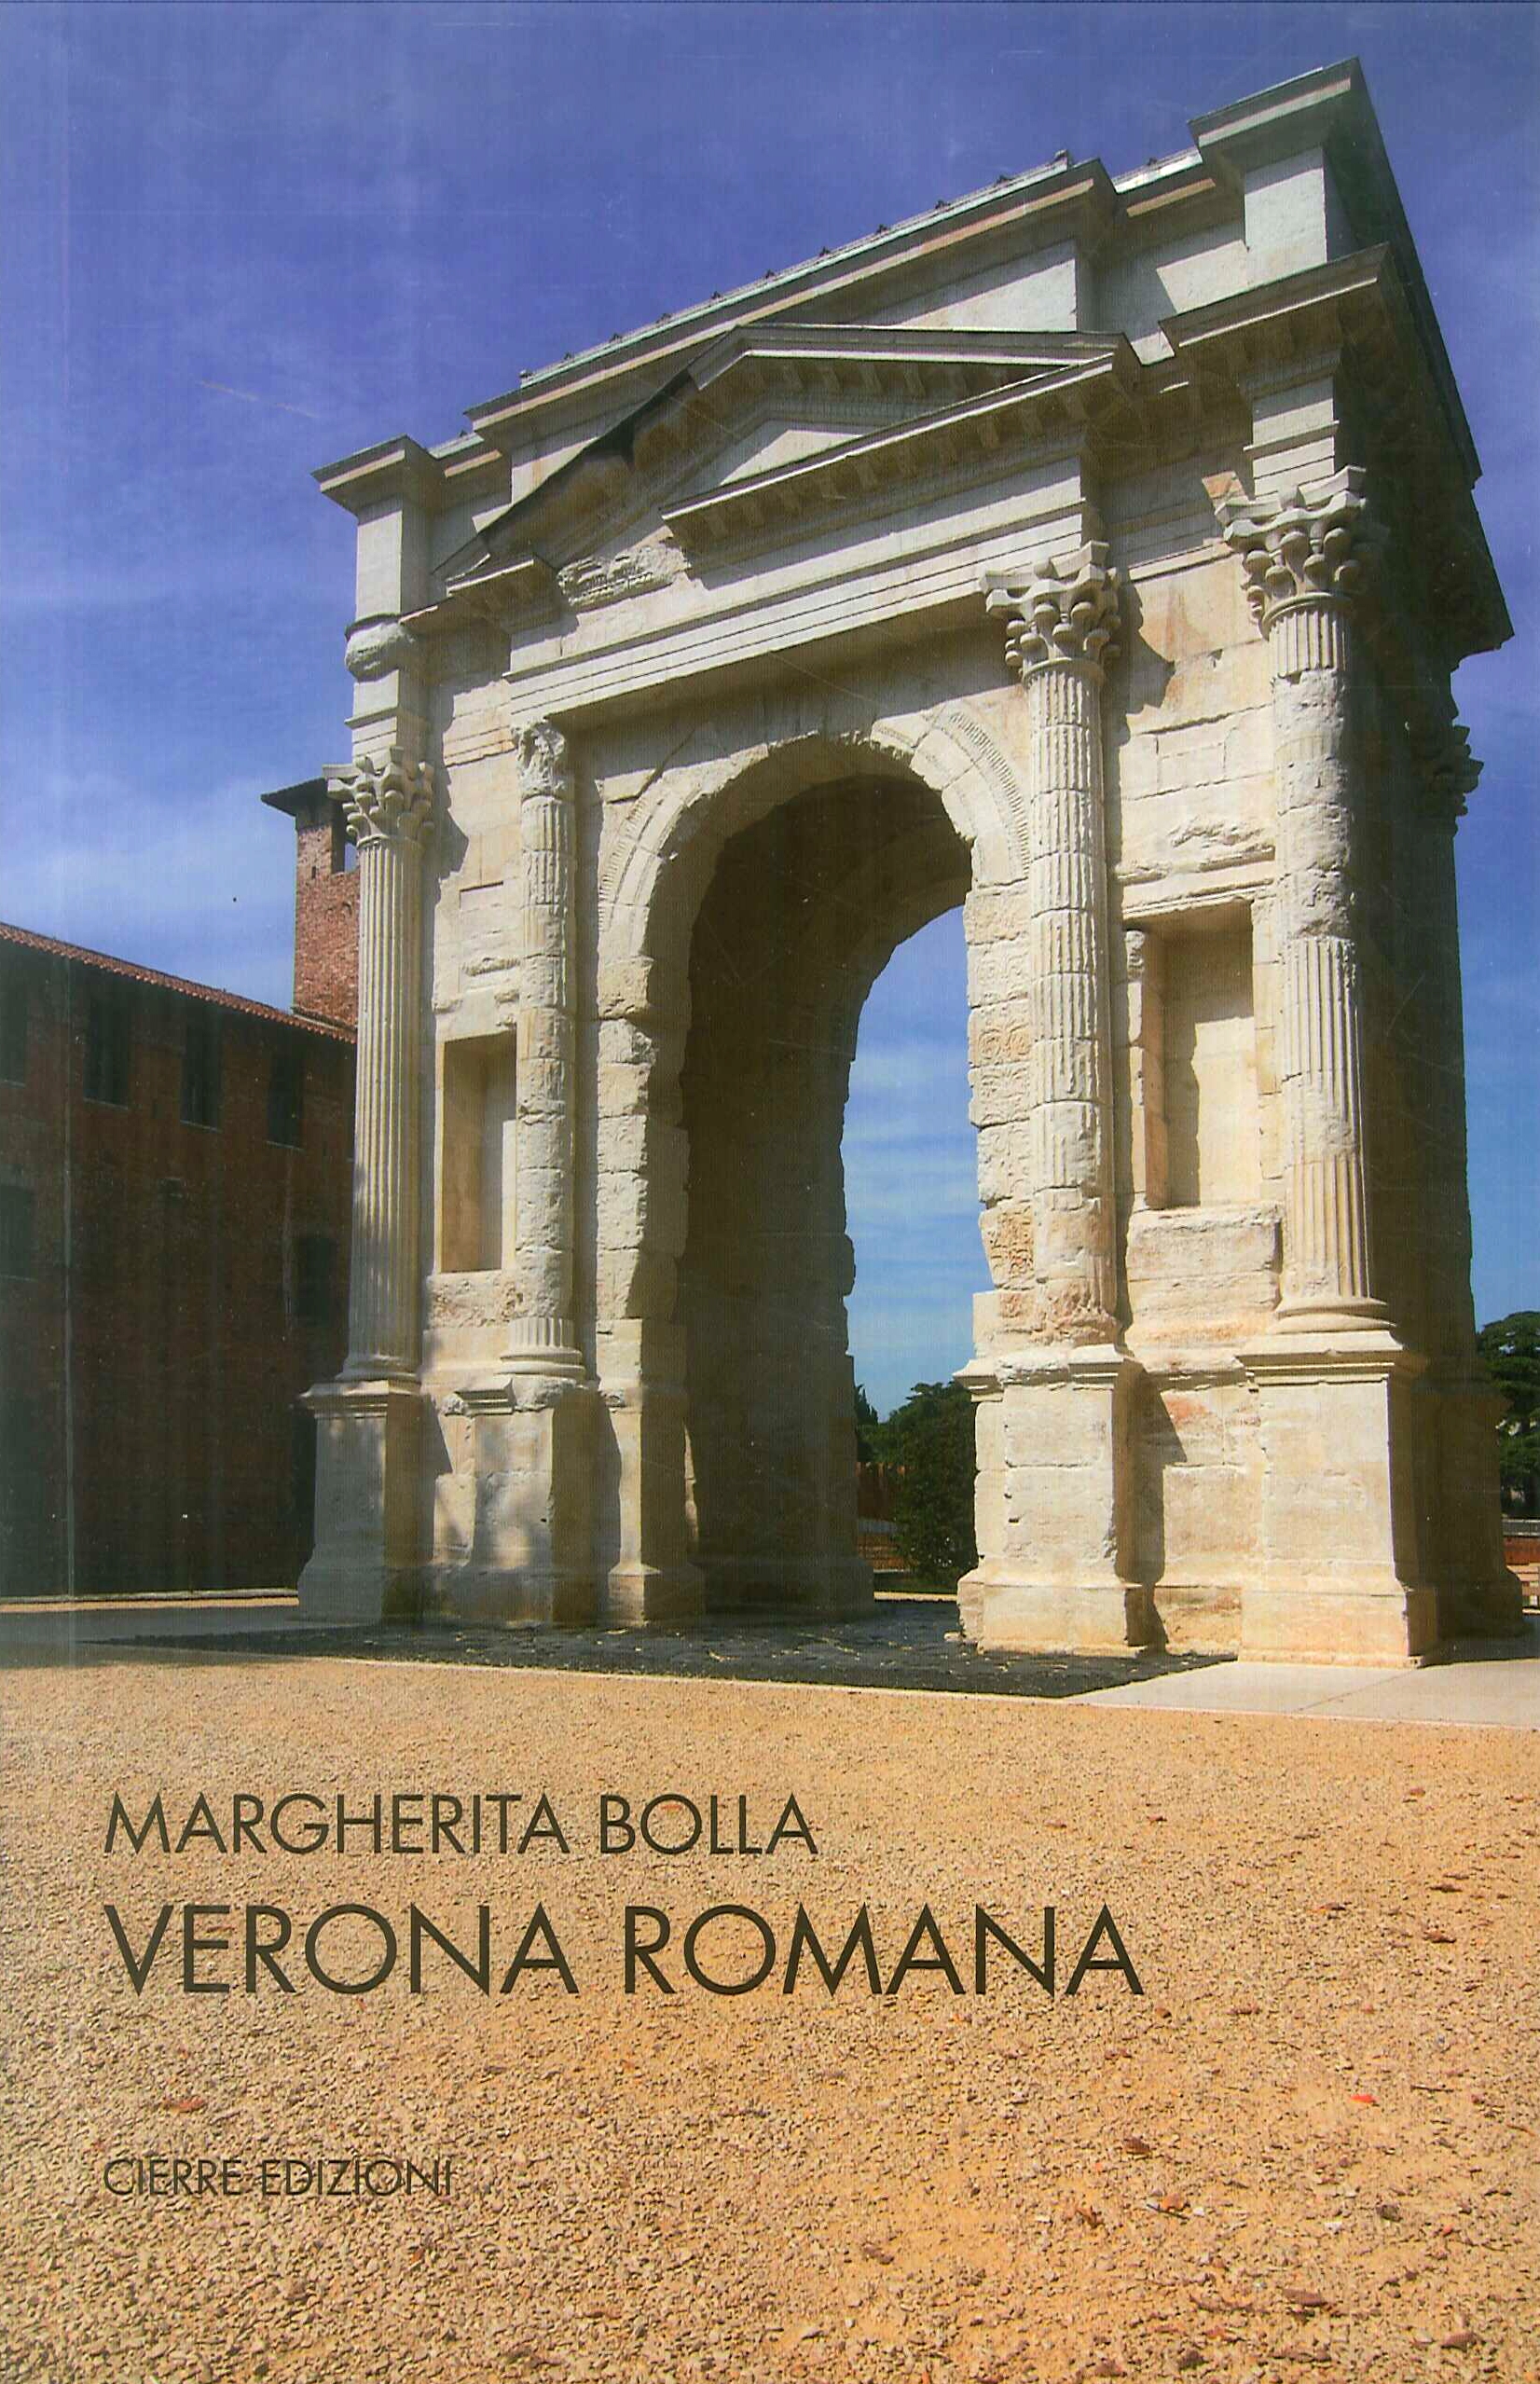 Verona Romana - Margherita Bolla